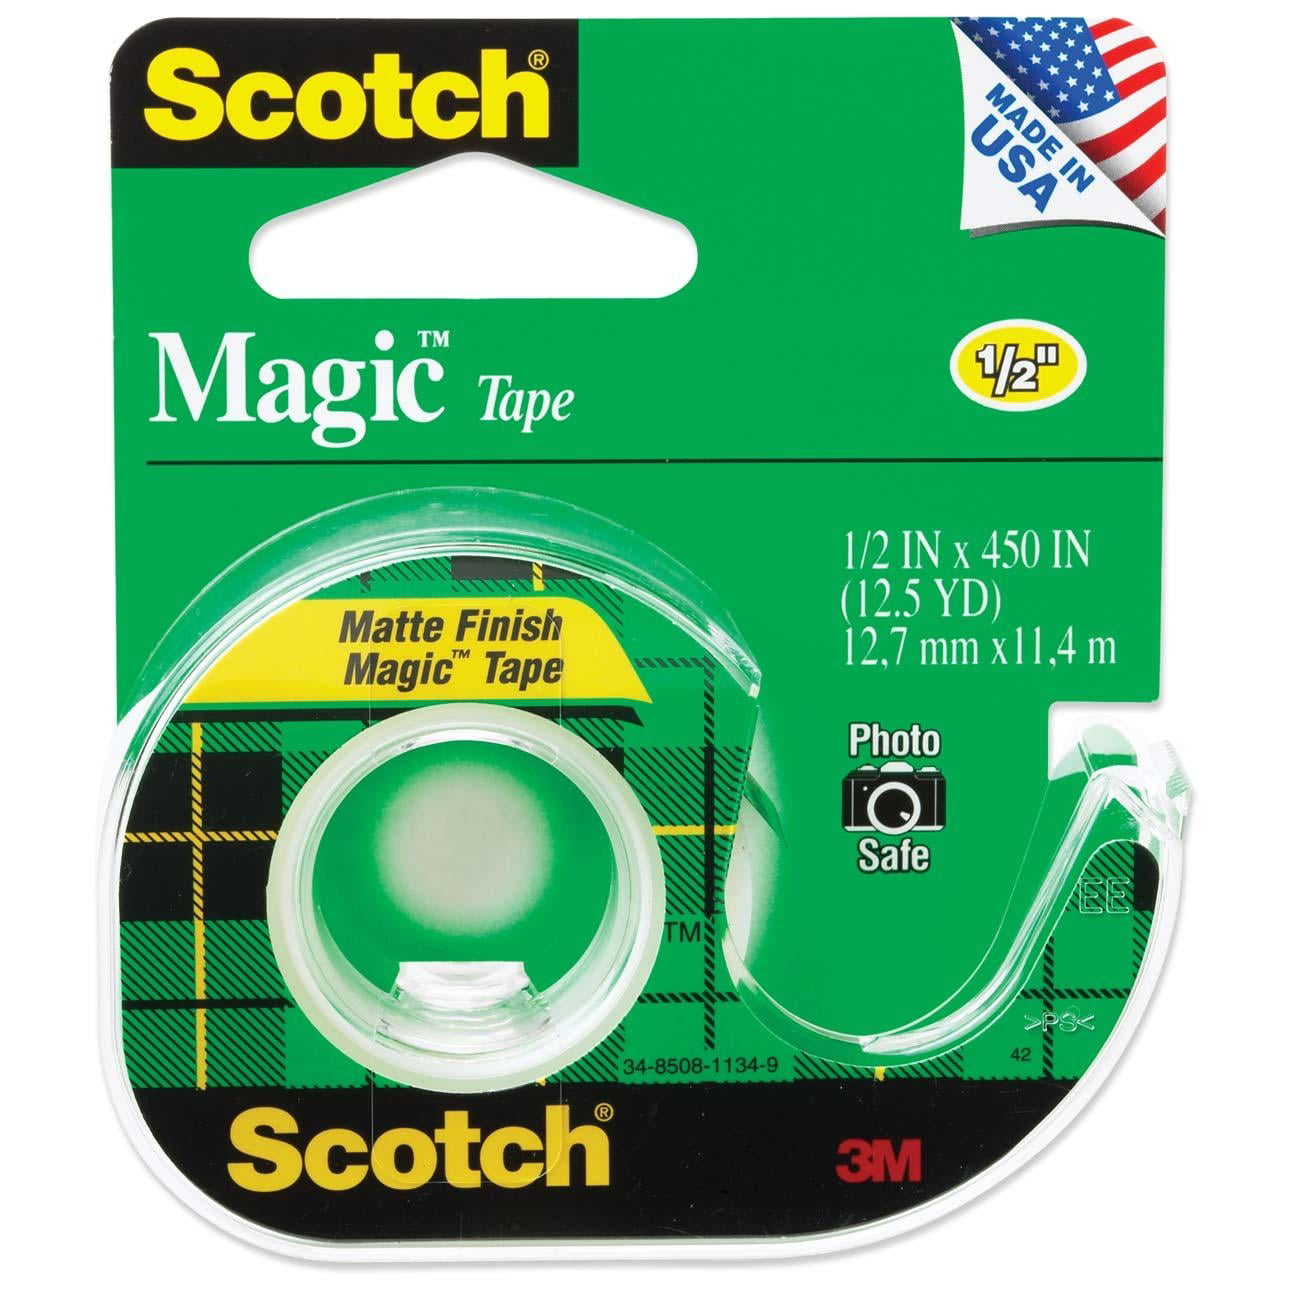  Scotch Magic Tape  with Handheld Dispenser Walmart com 